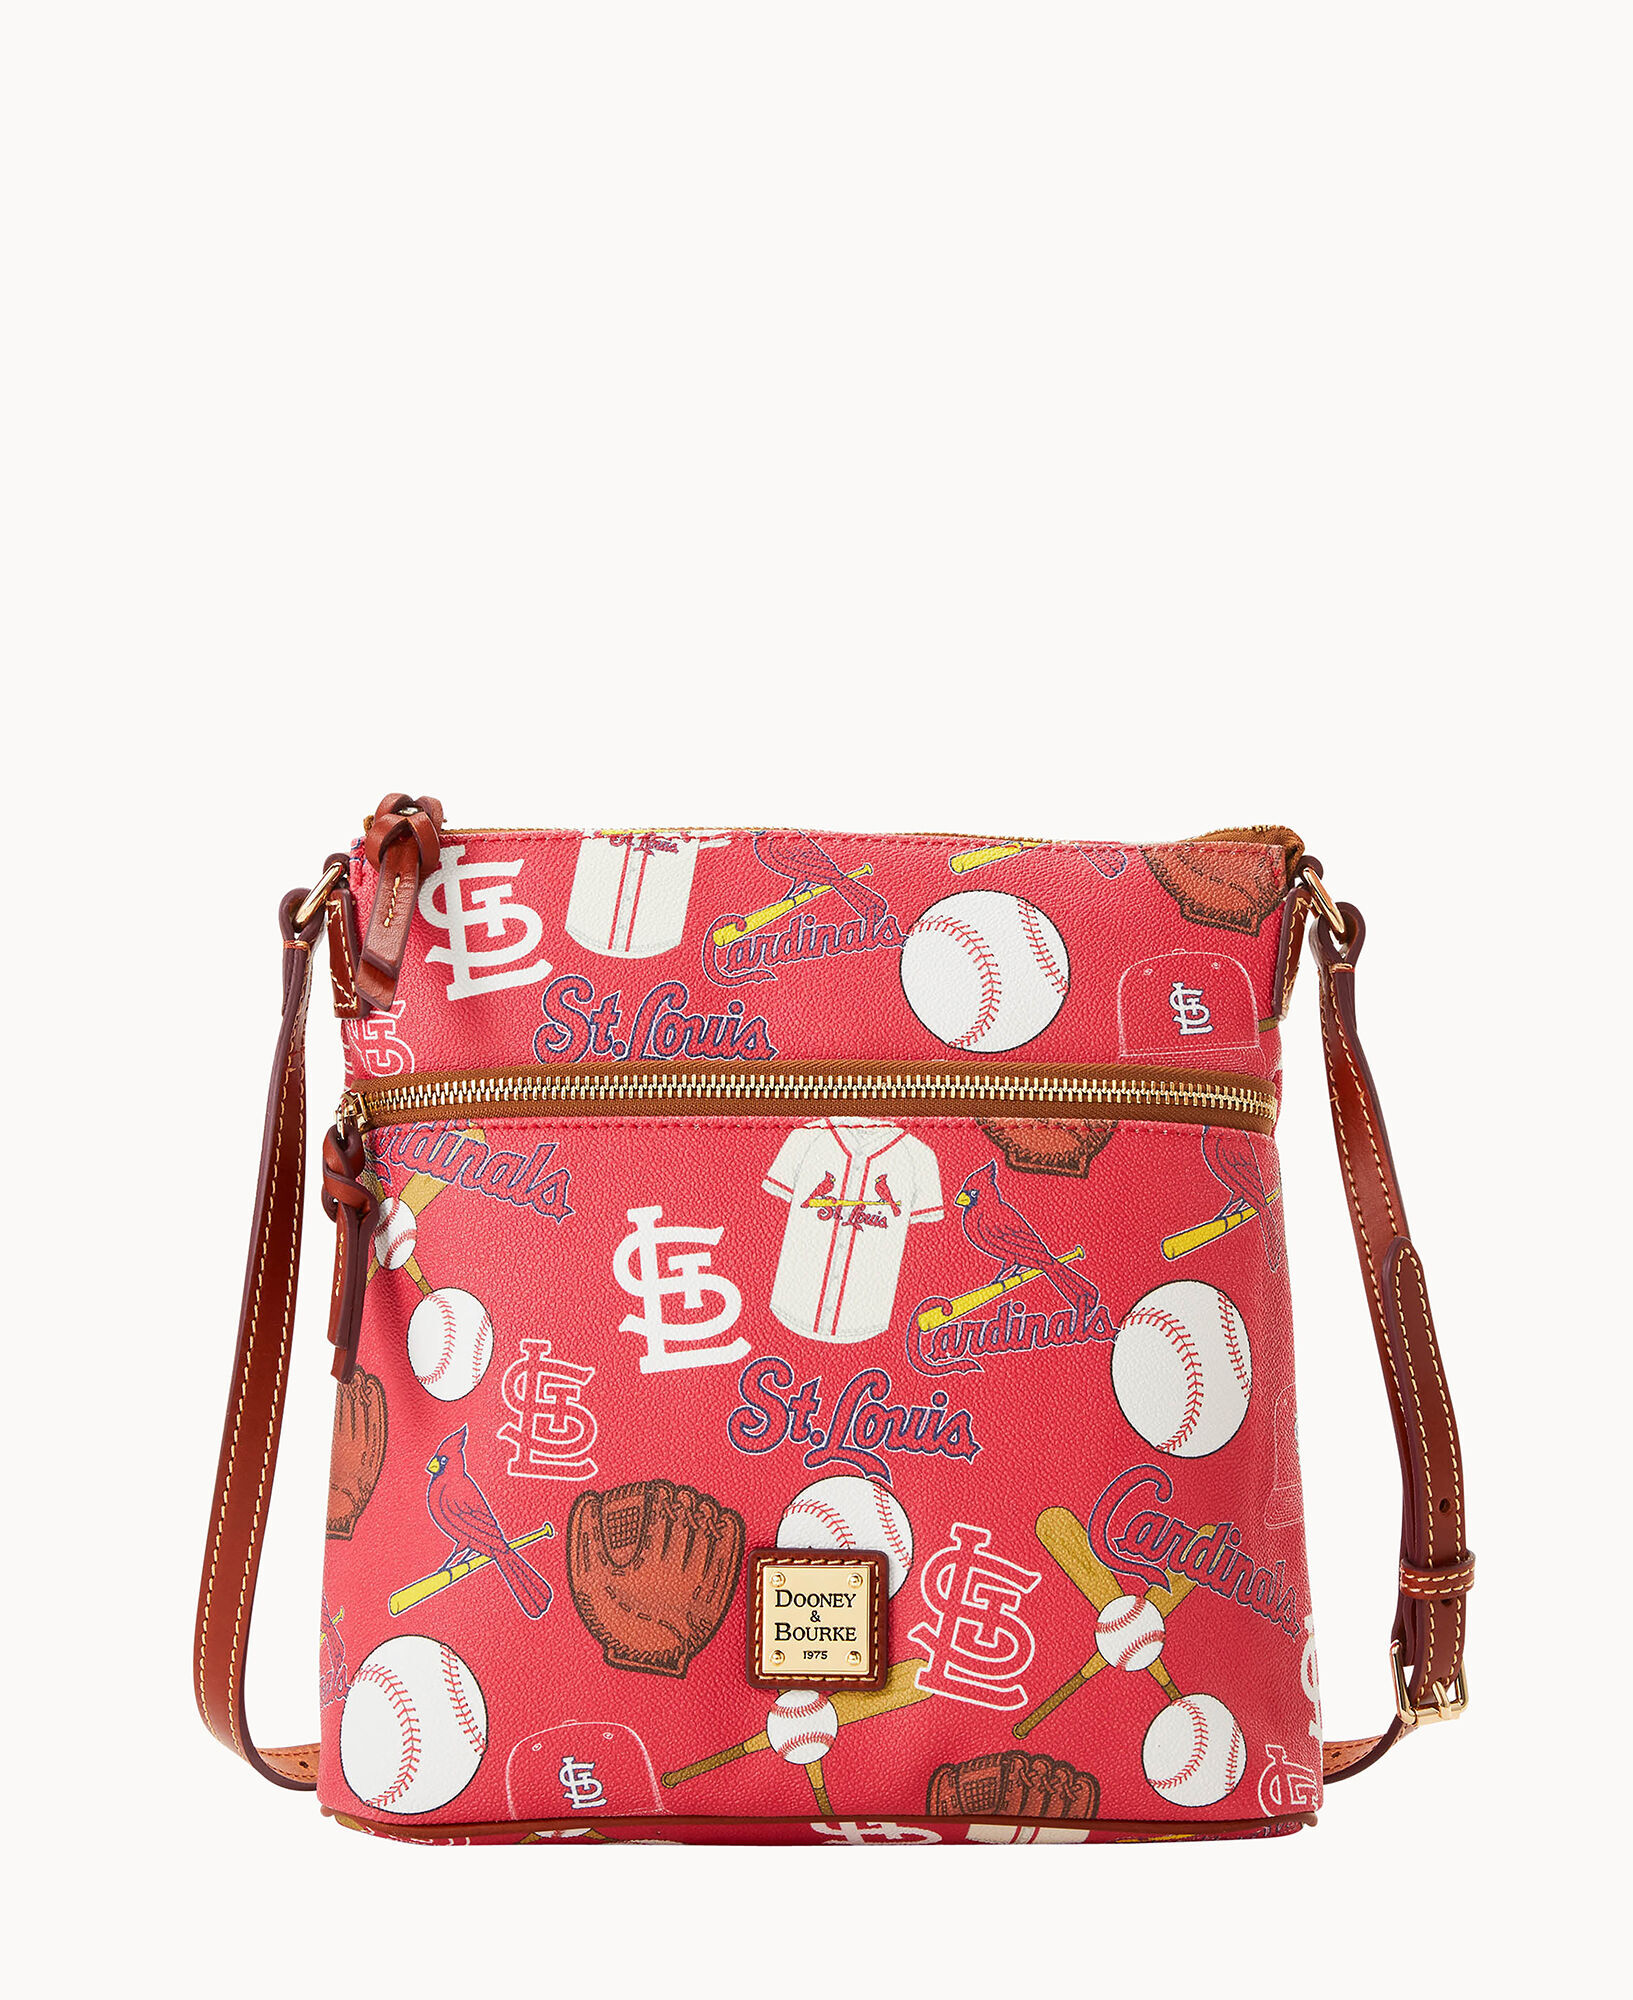 St. Louis Cardinals Sports Fan Bags for sale